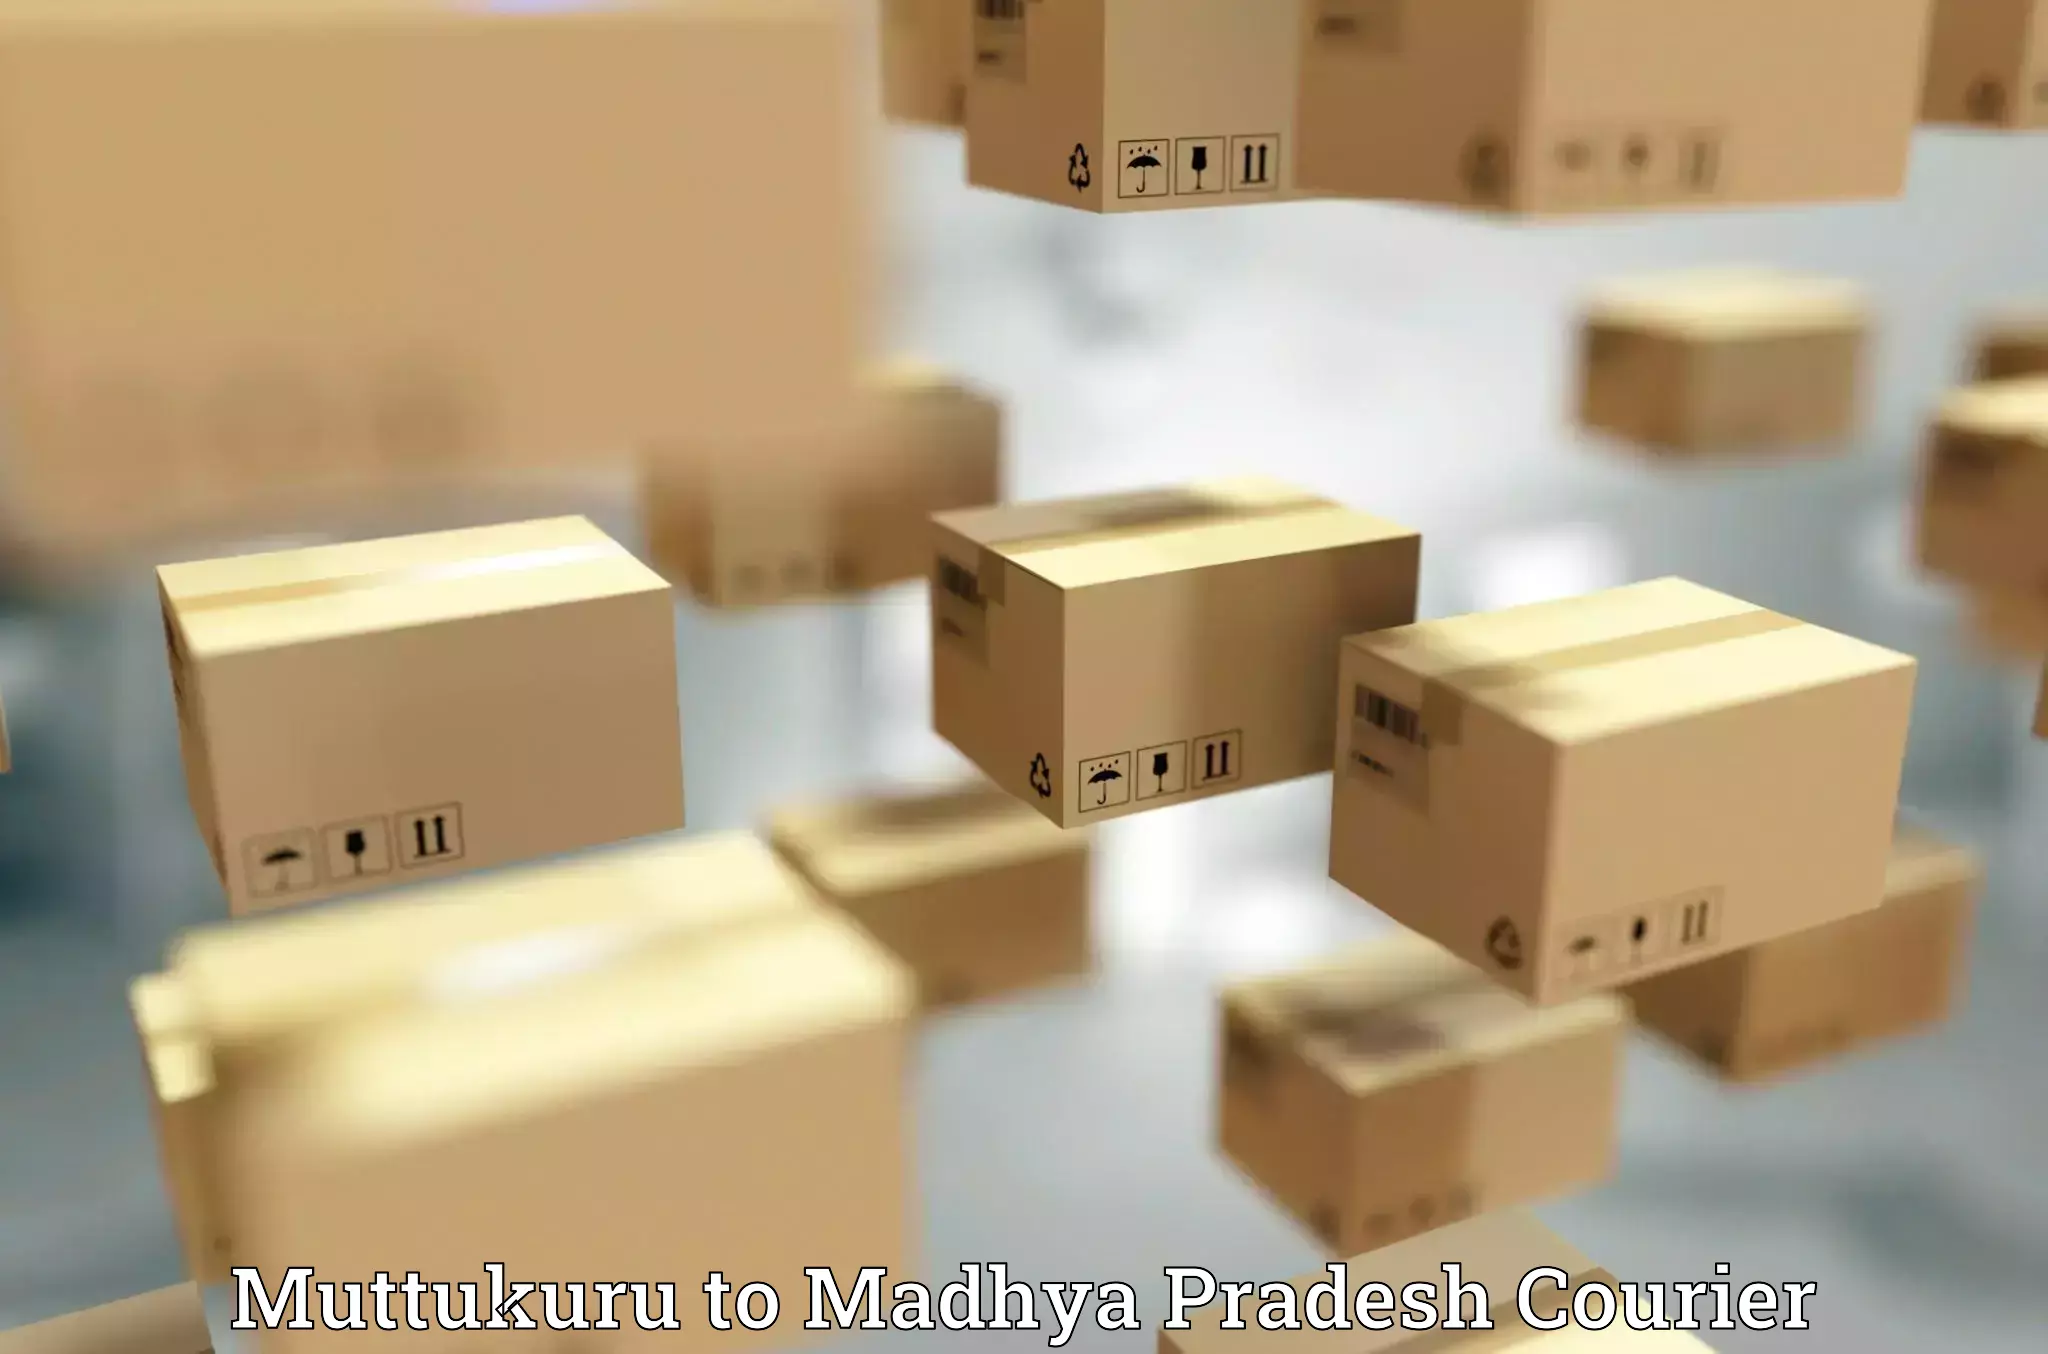 User-friendly delivery service Muttukuru to Indore